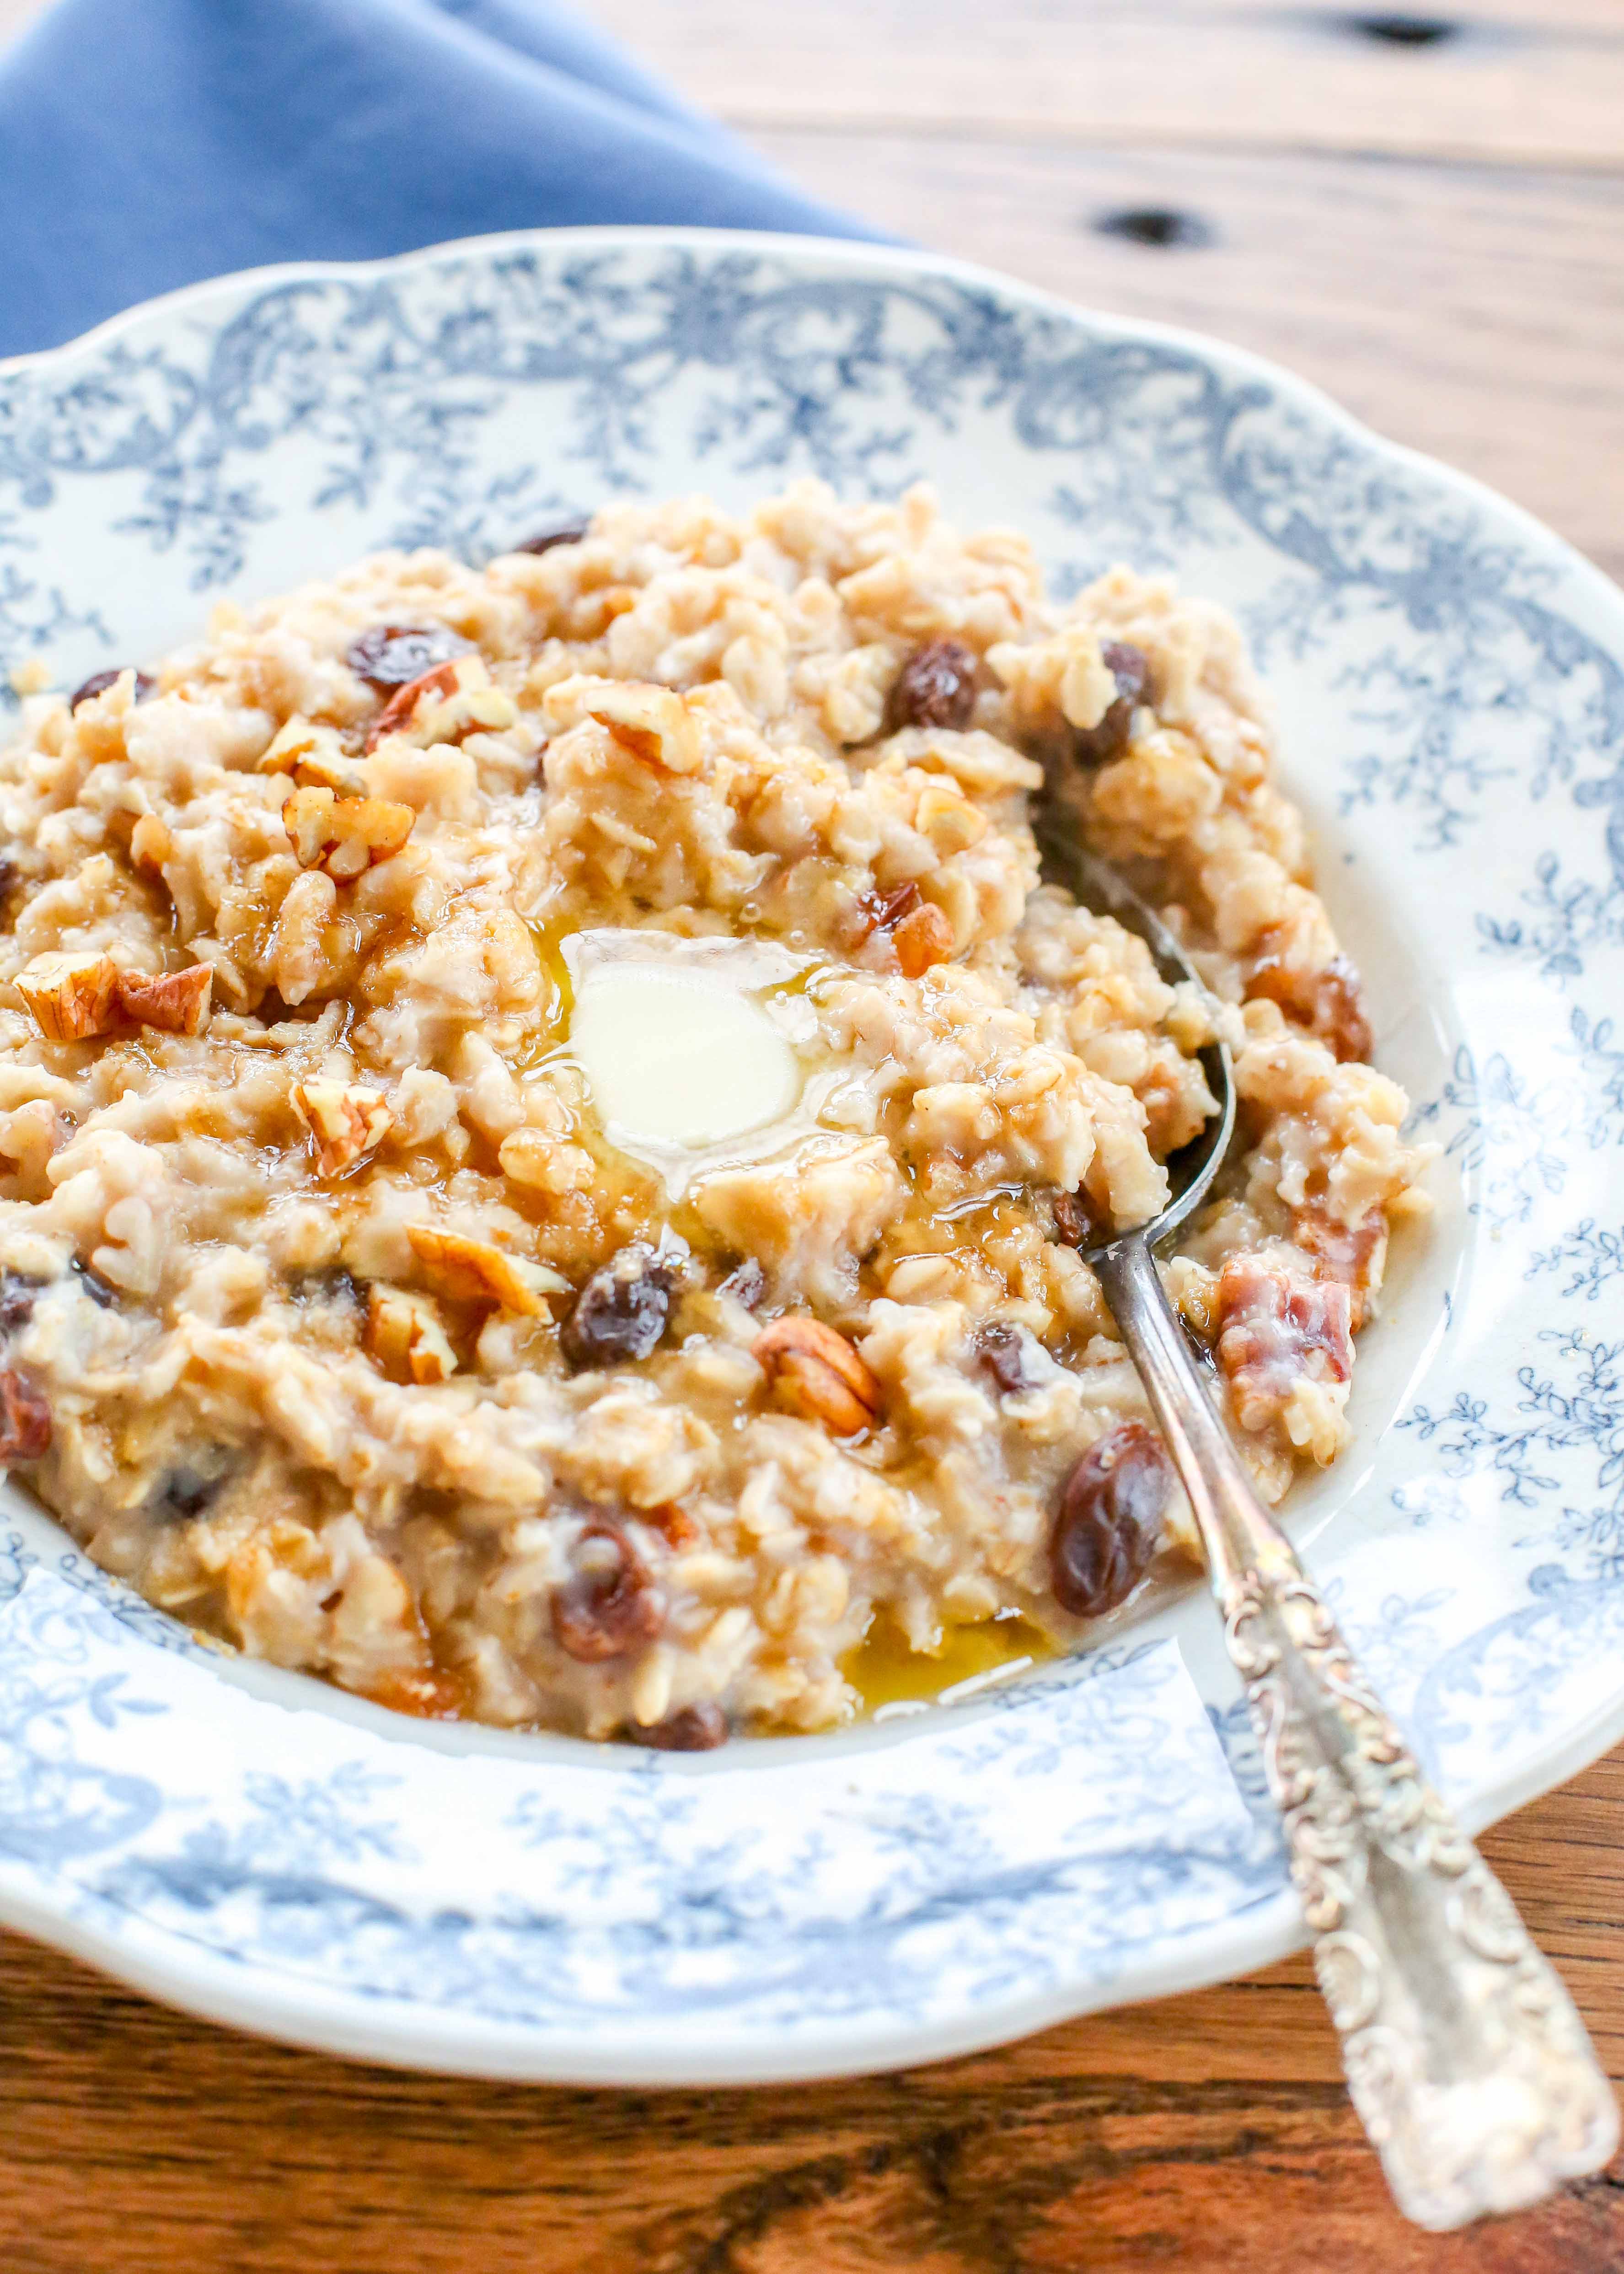 Porridge With Raisins And Creme Fraiche, Recipe